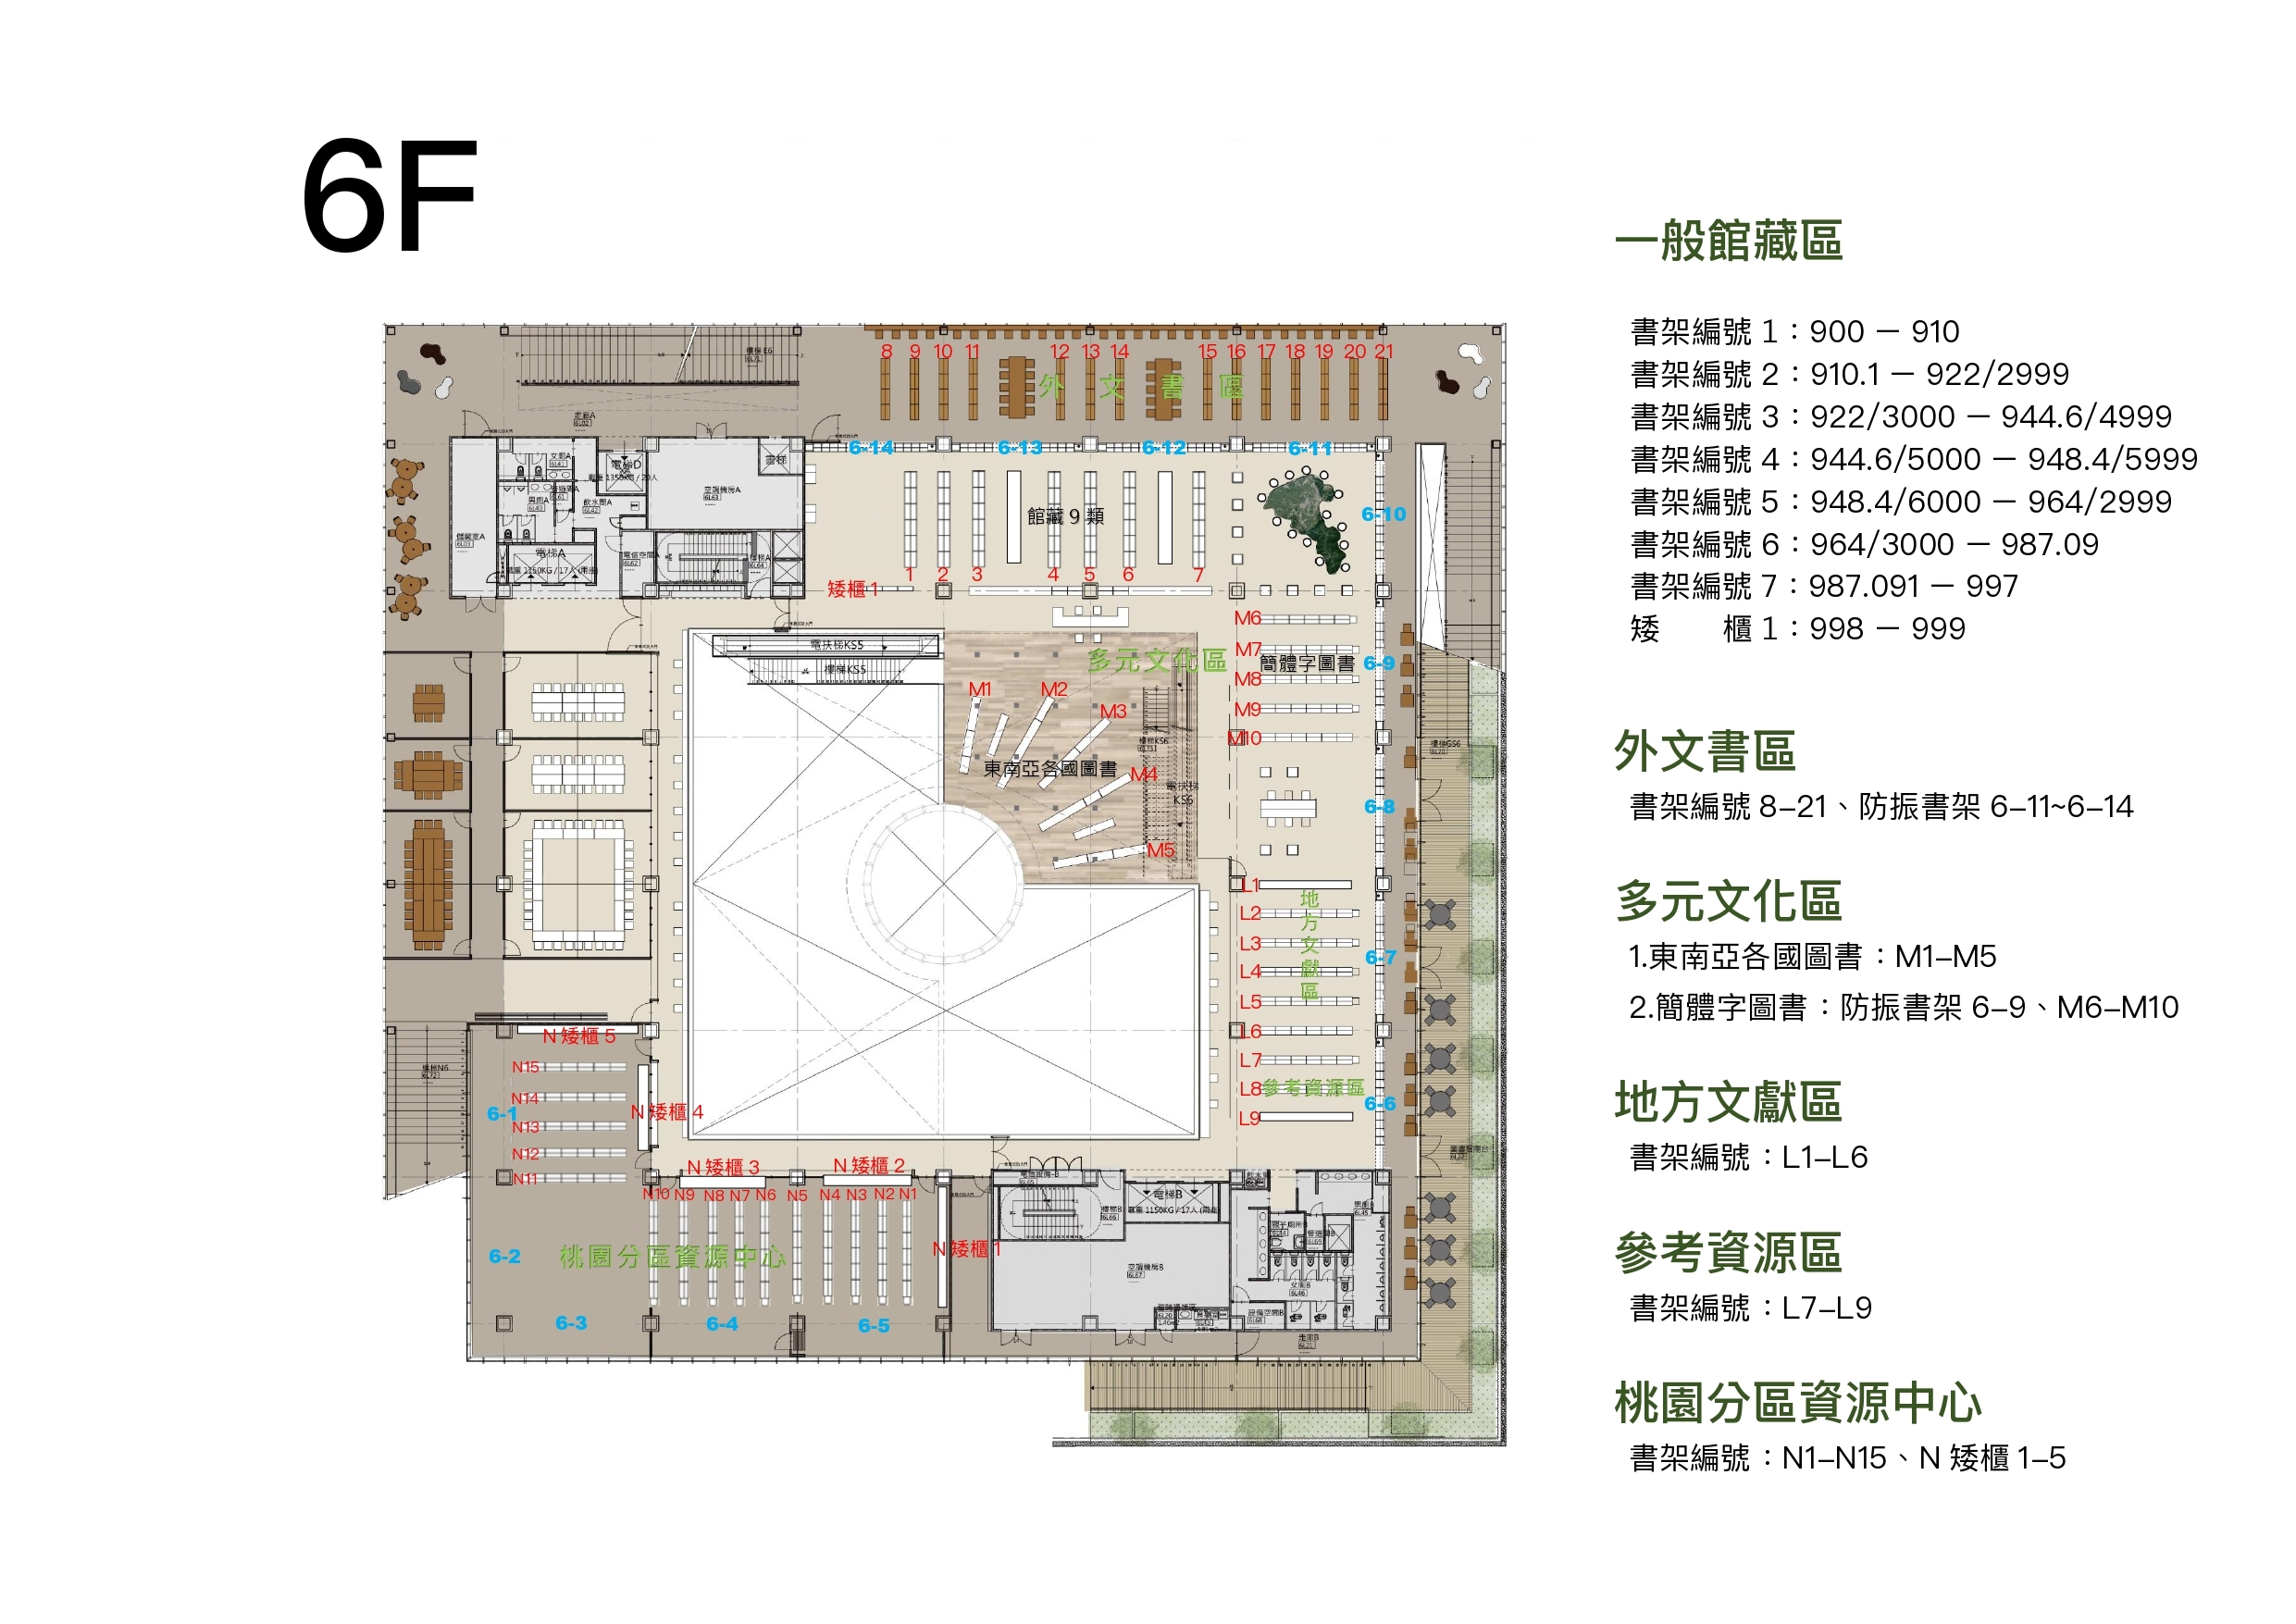 6F 一般館藏區平面圖